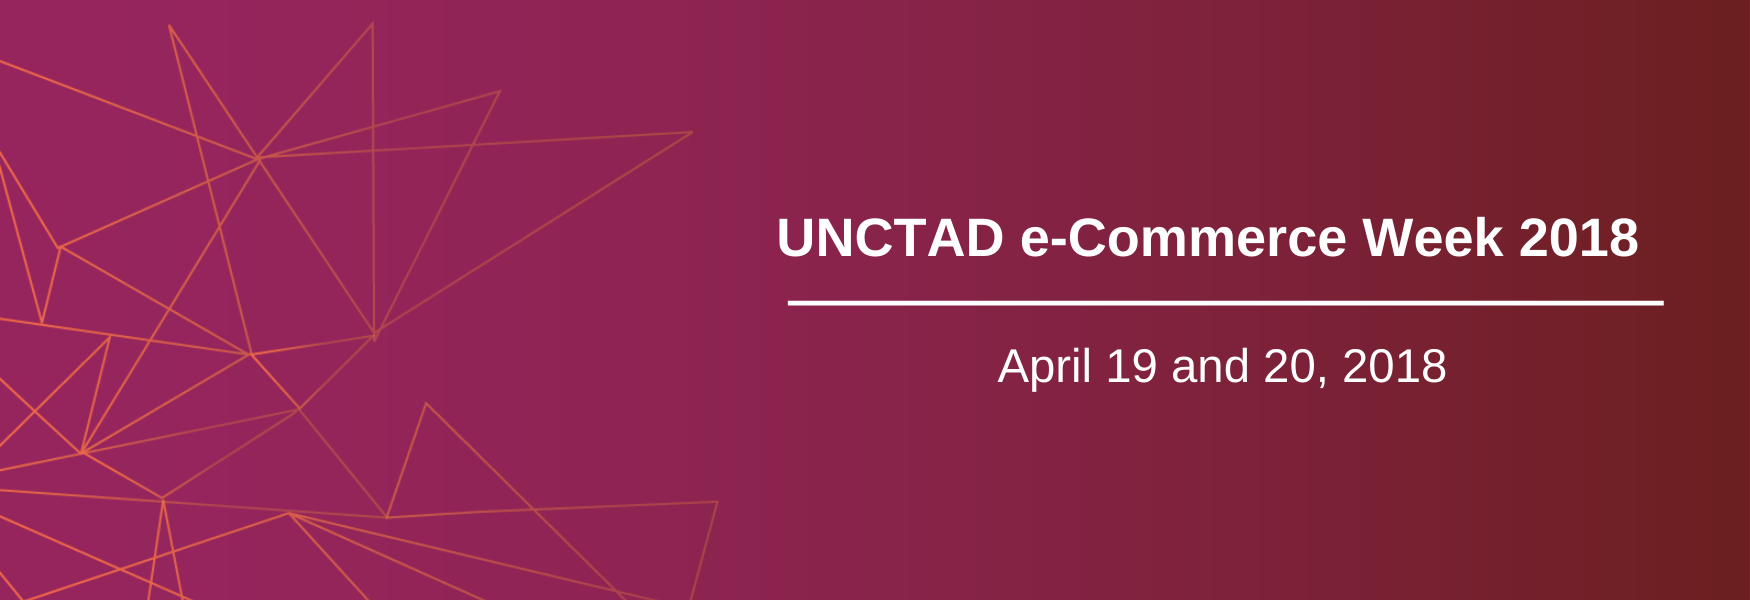 UNCTAD e-commerce Week 2018